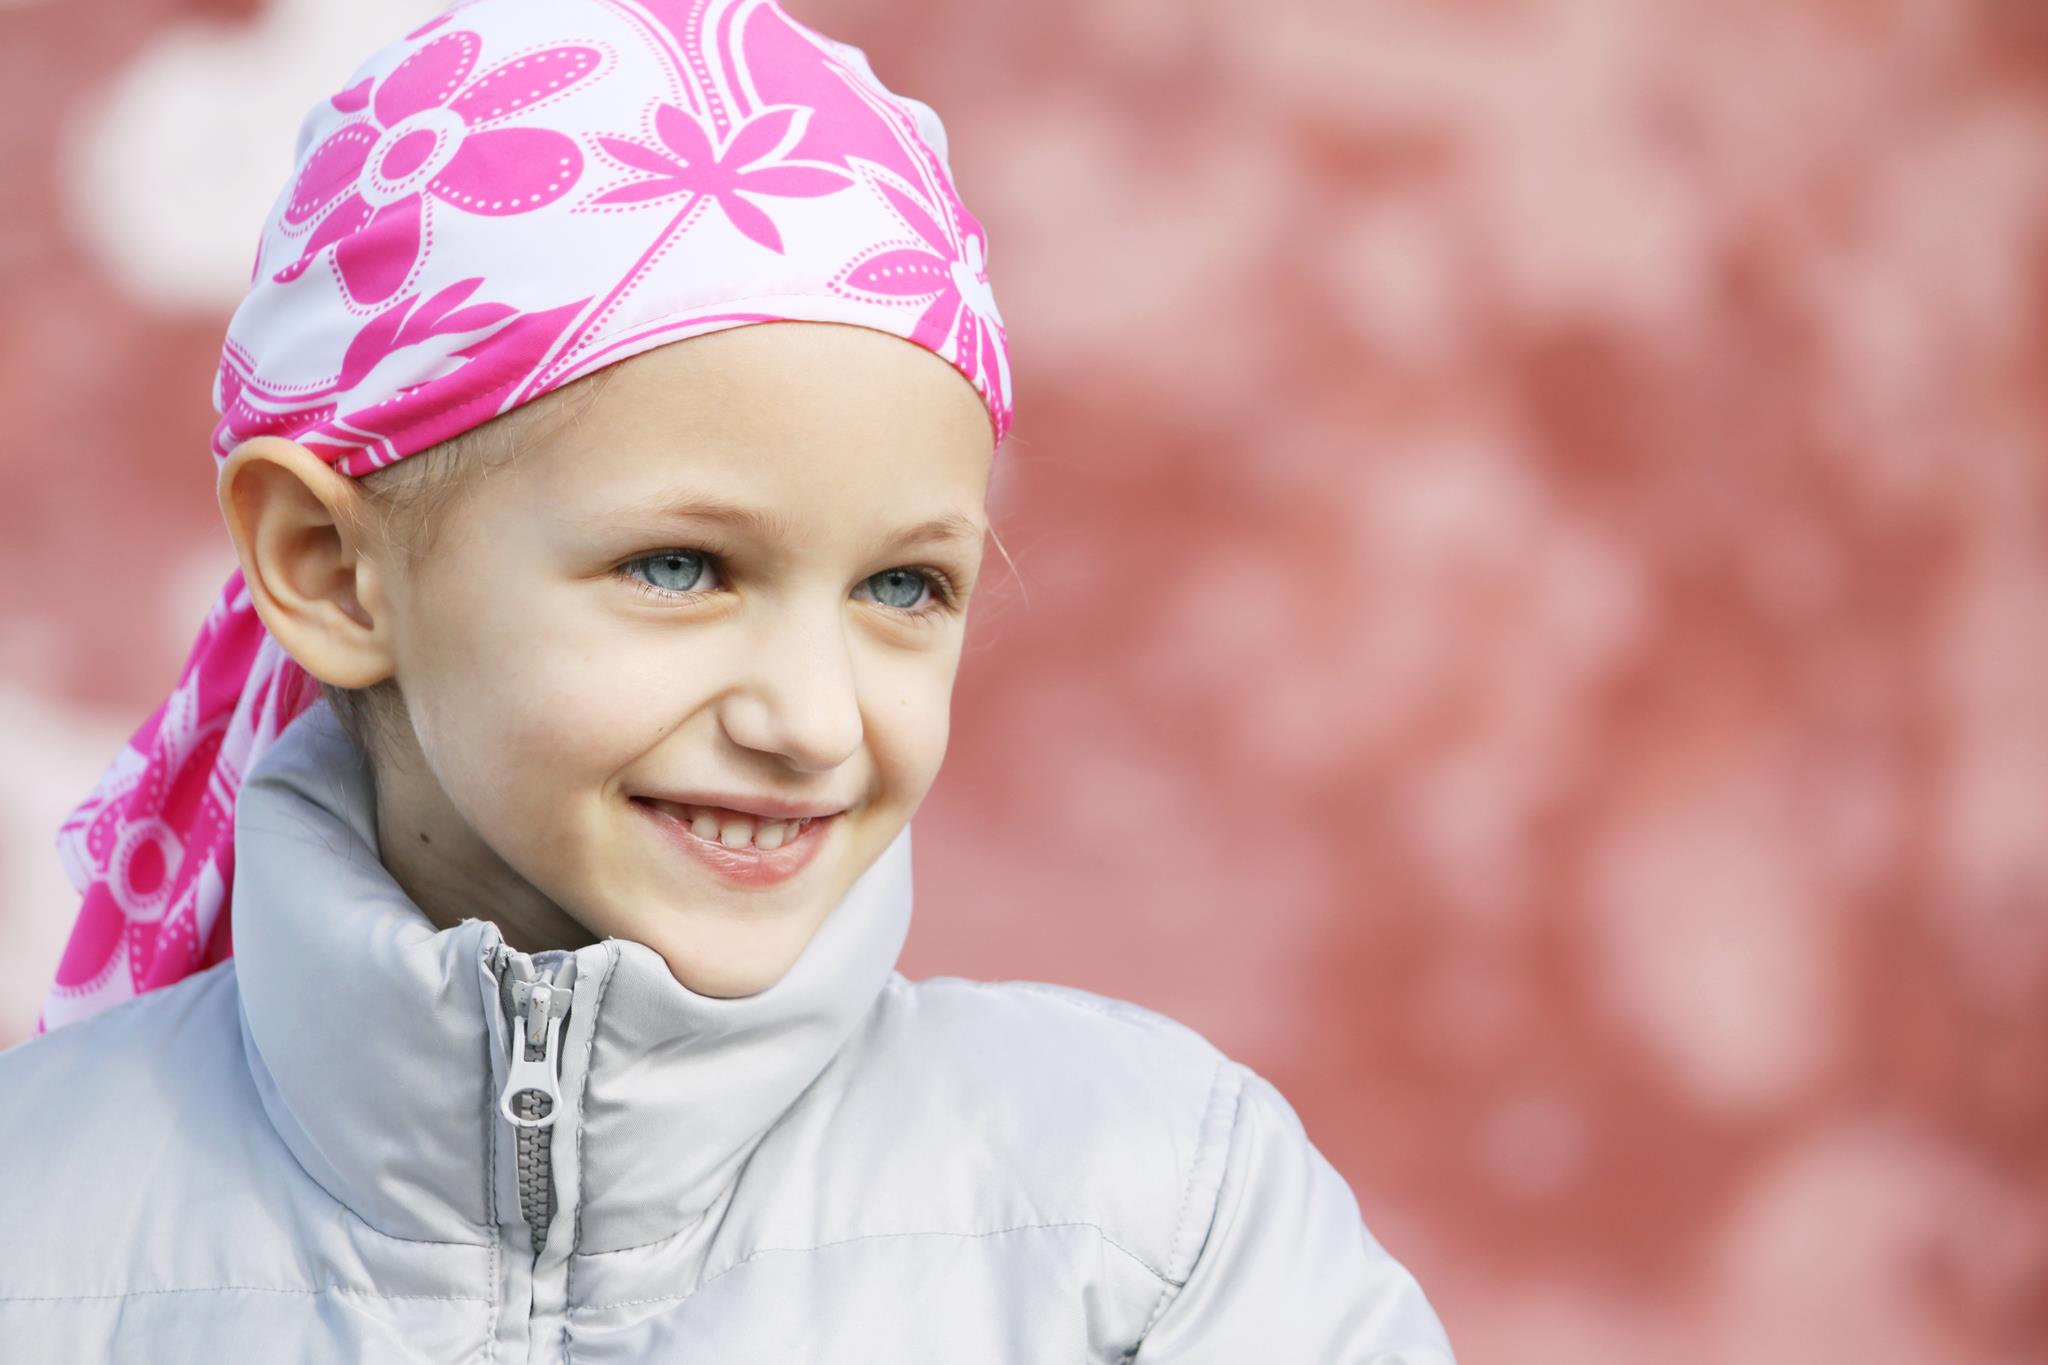 child with pediatric brain cancer